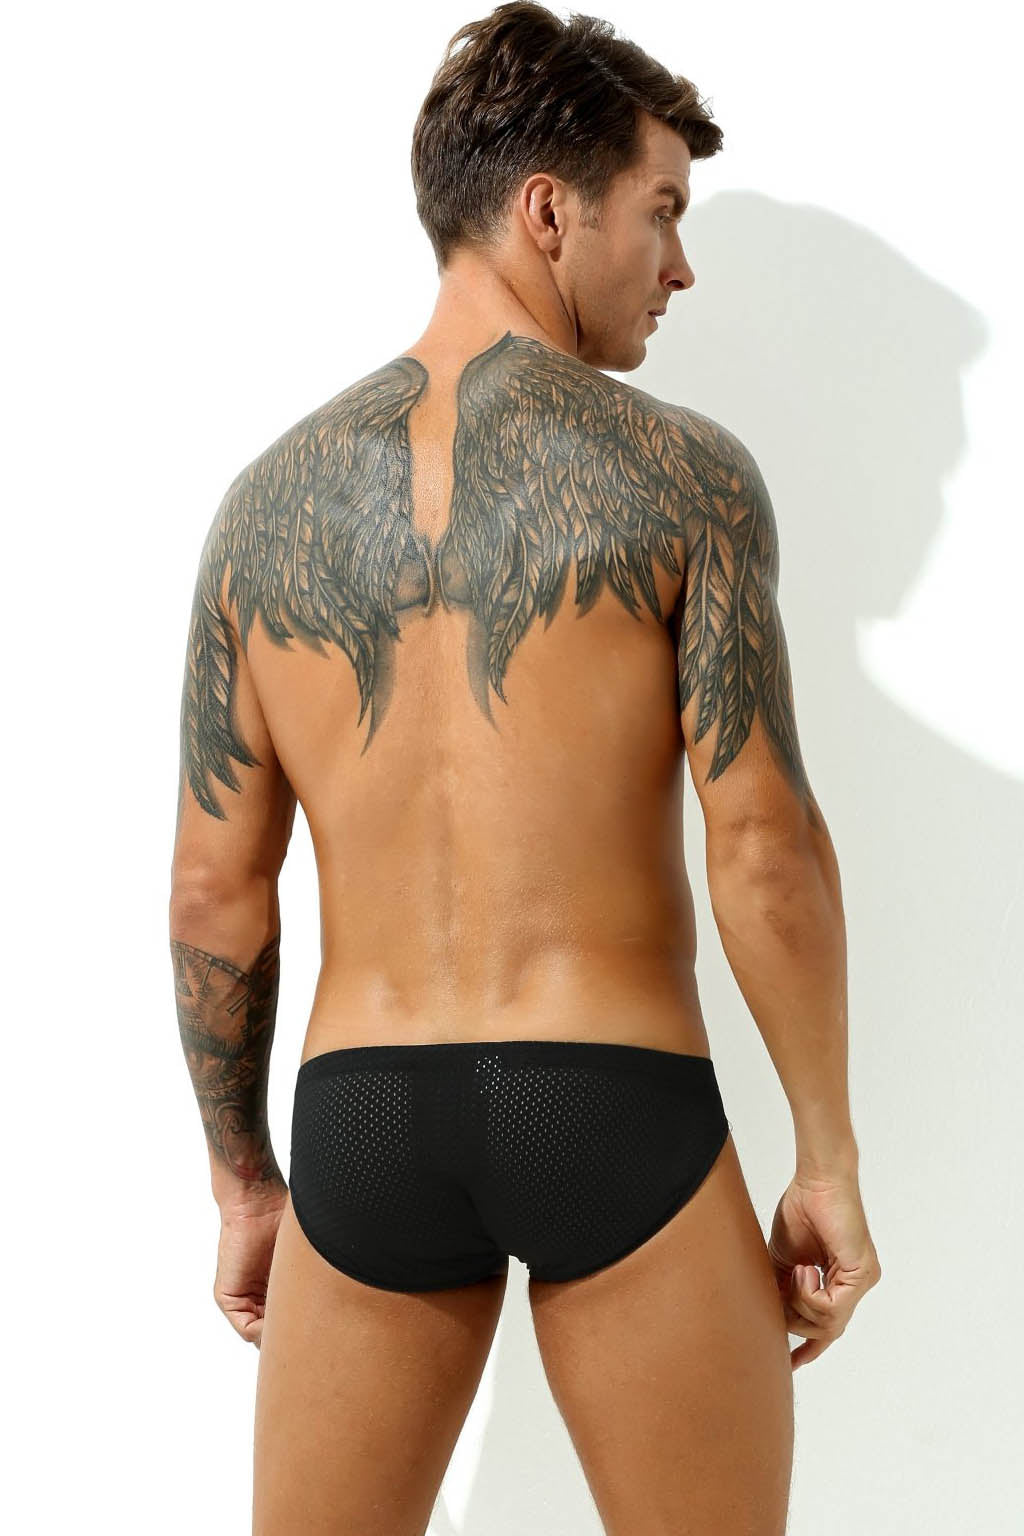 BfM Mens Micro Sheer Bikini Pouch Underwear – Bodywear for Men